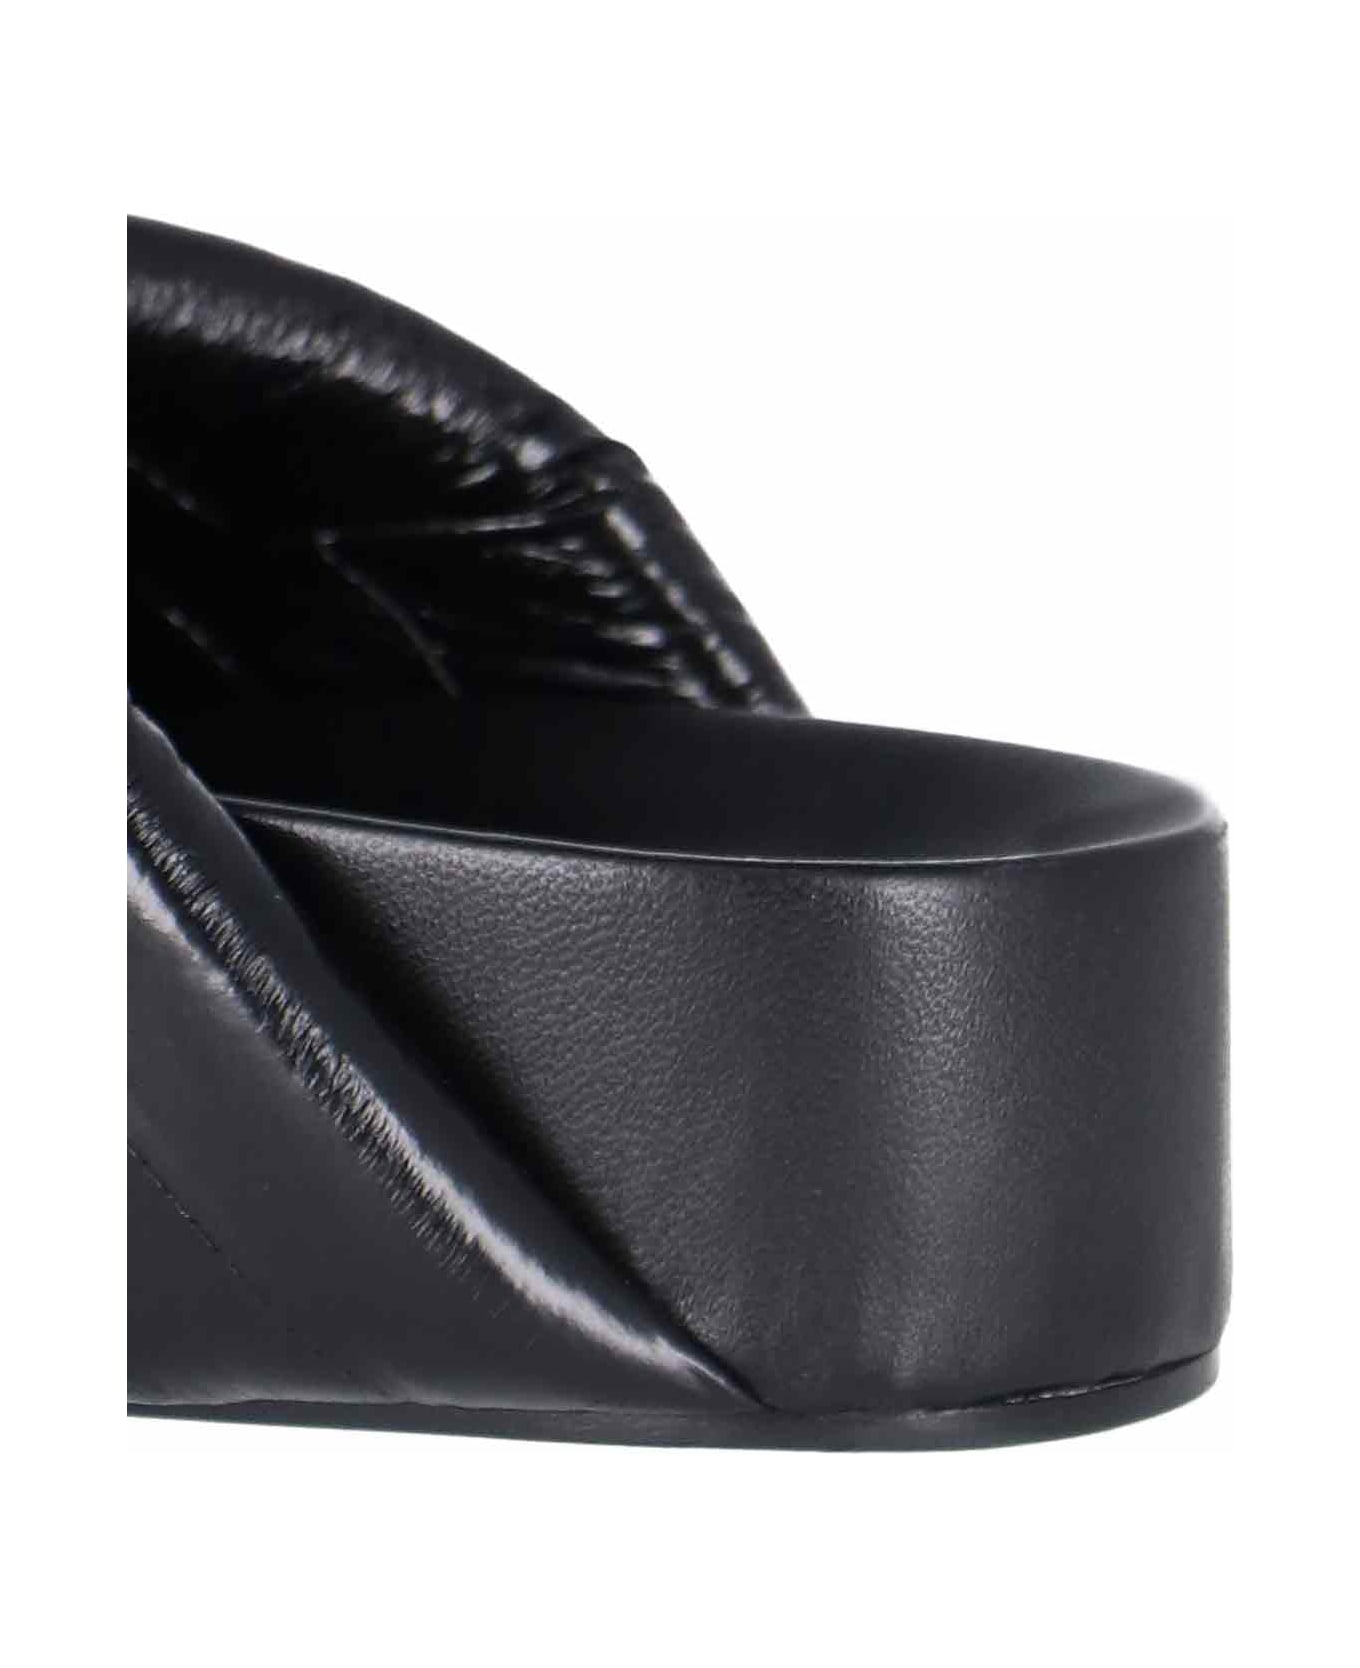 Jil Sander Crossed Sandals - Black   サンダル